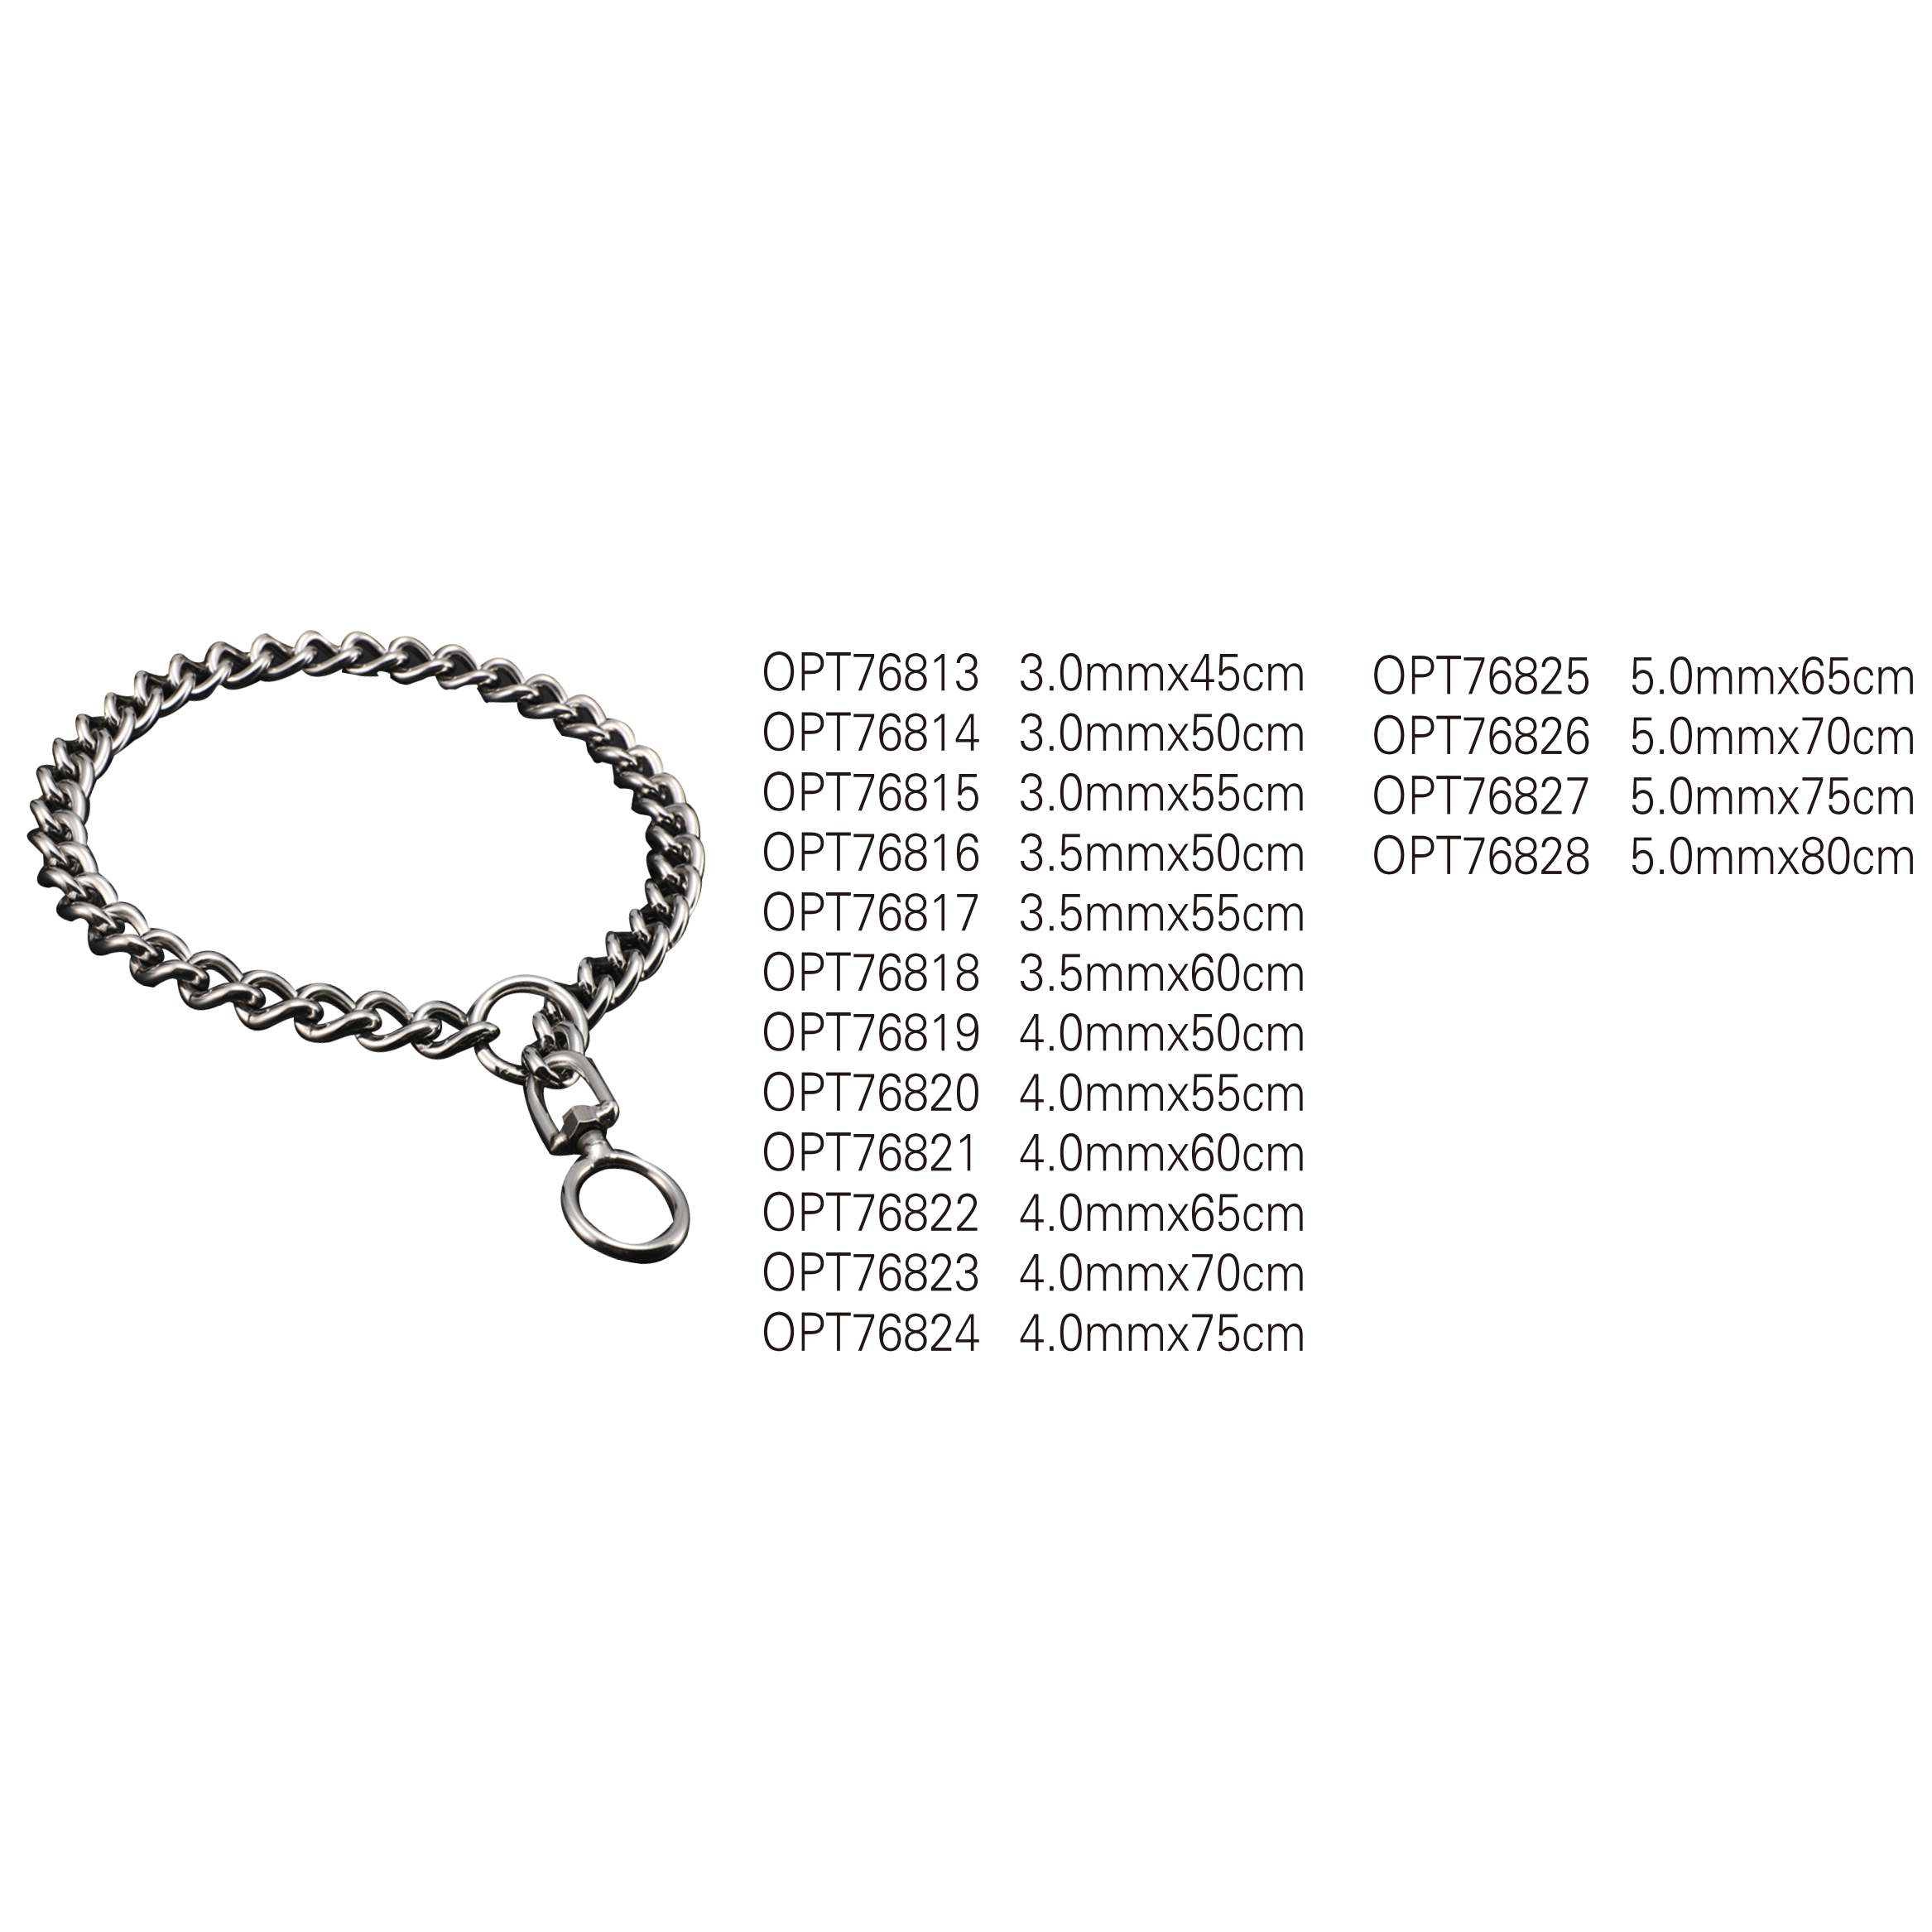 OPT76813-OPT76828 S.S.Choke chains